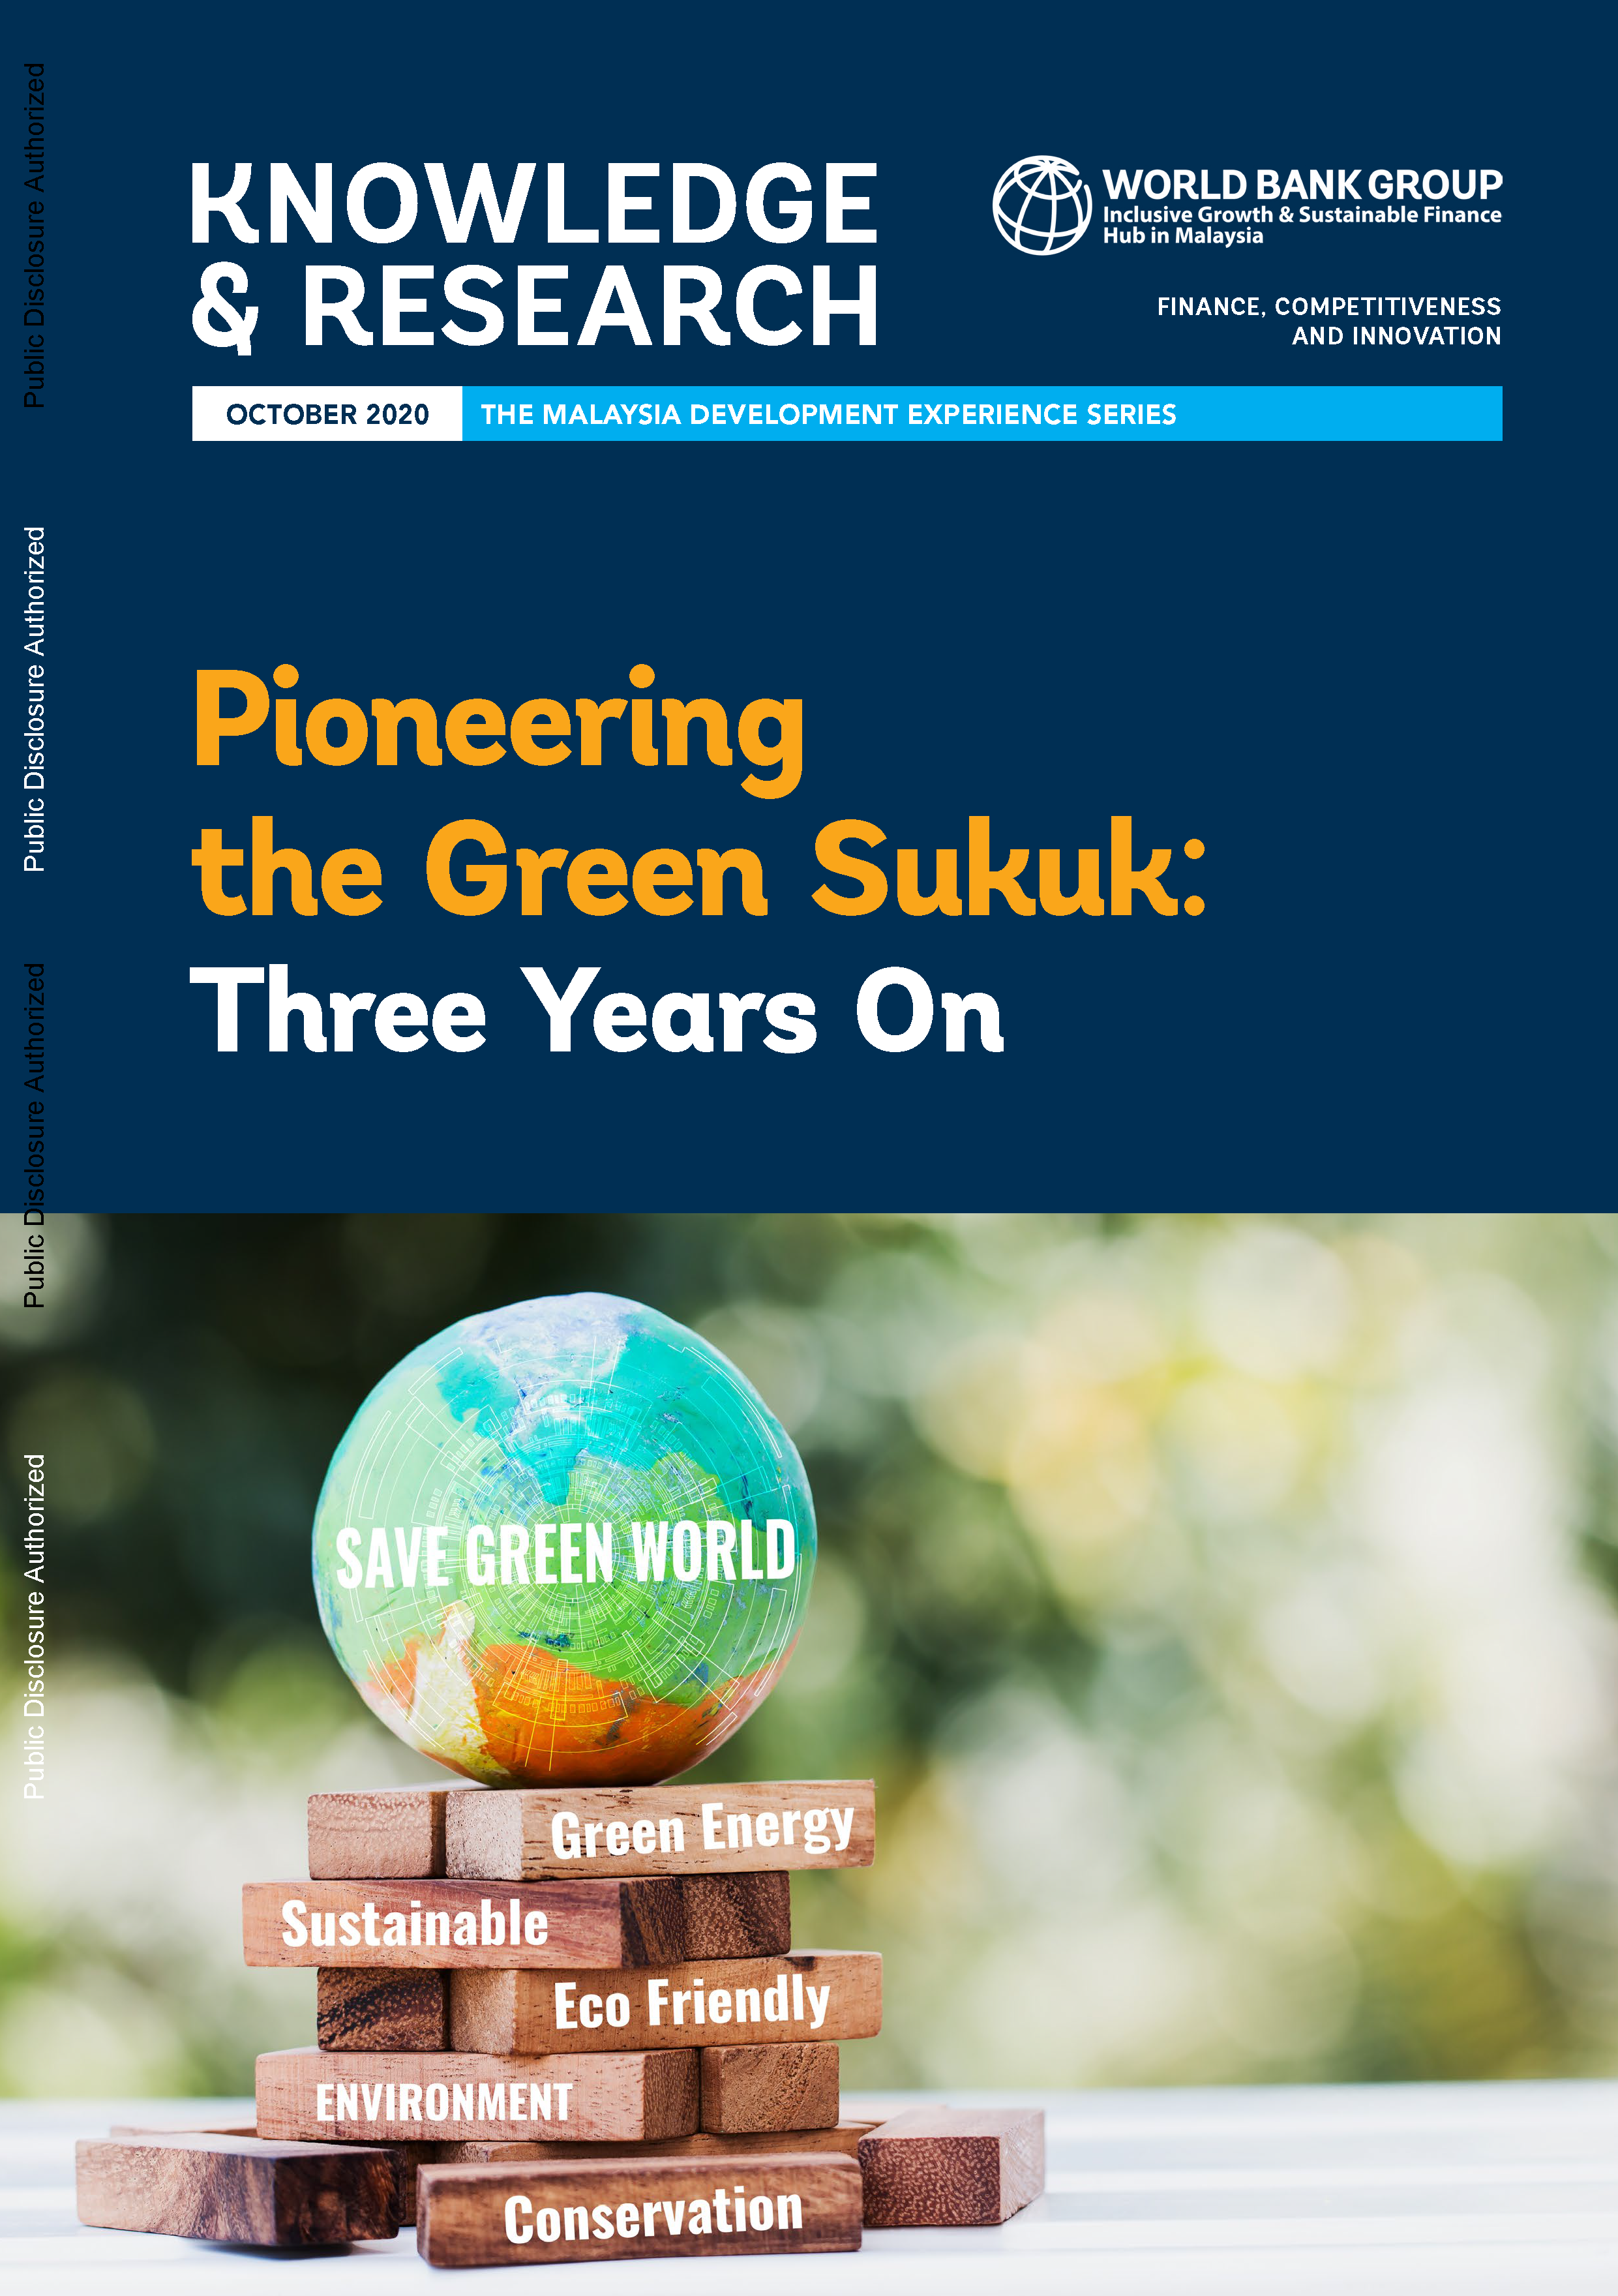 Pioneering the Green Sukuk: Three Years On